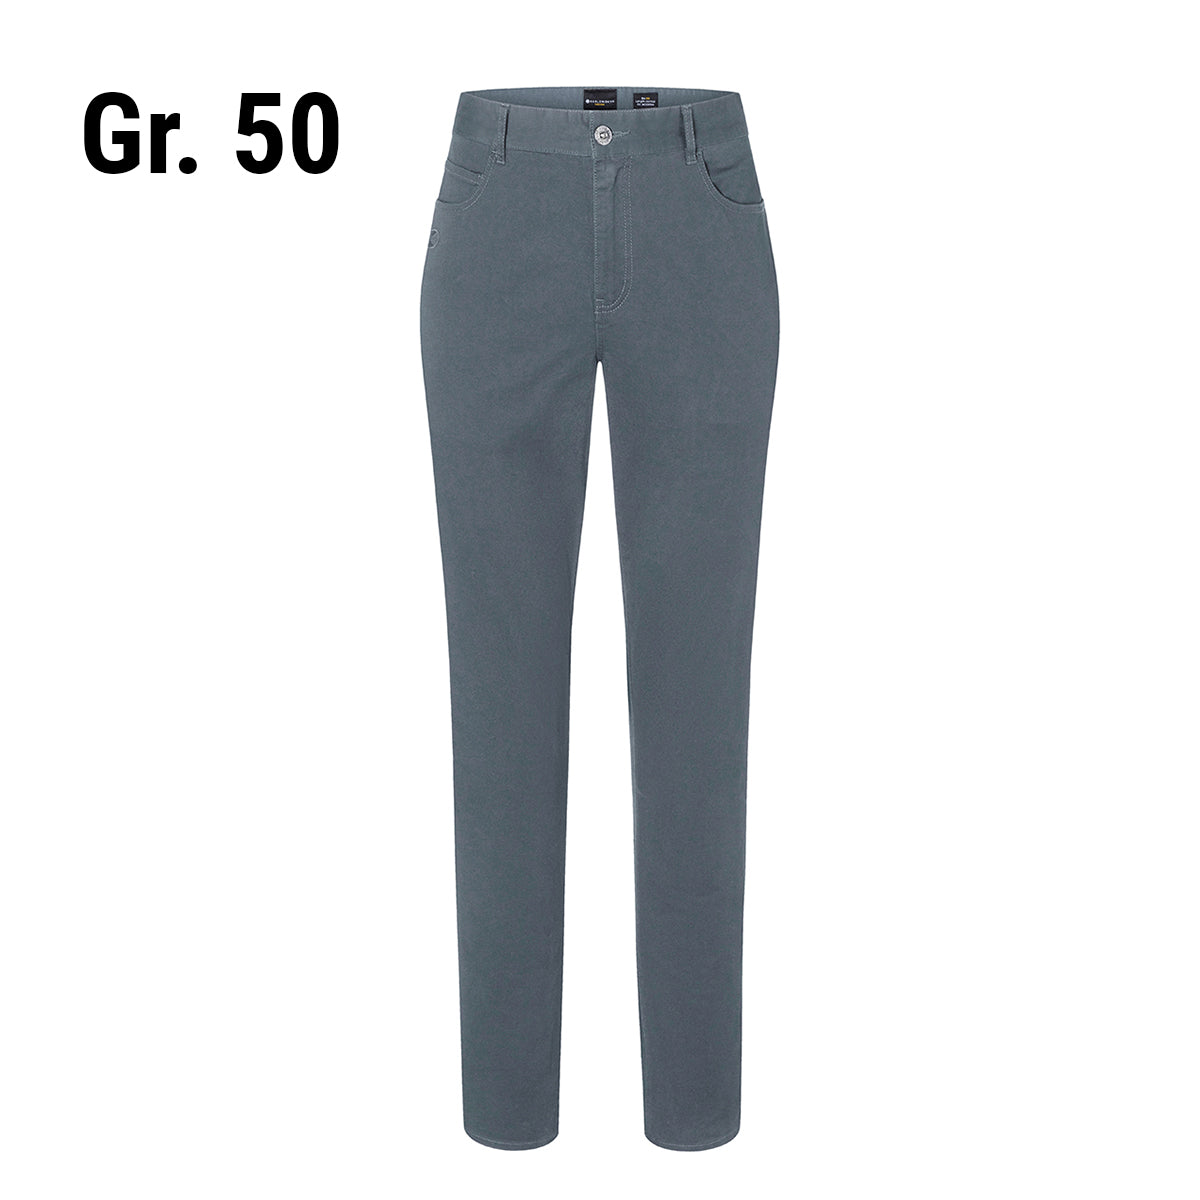 (6 stk.) Karlowsky - bukser med 5 lommer til damer - antracit - størrelse: 50